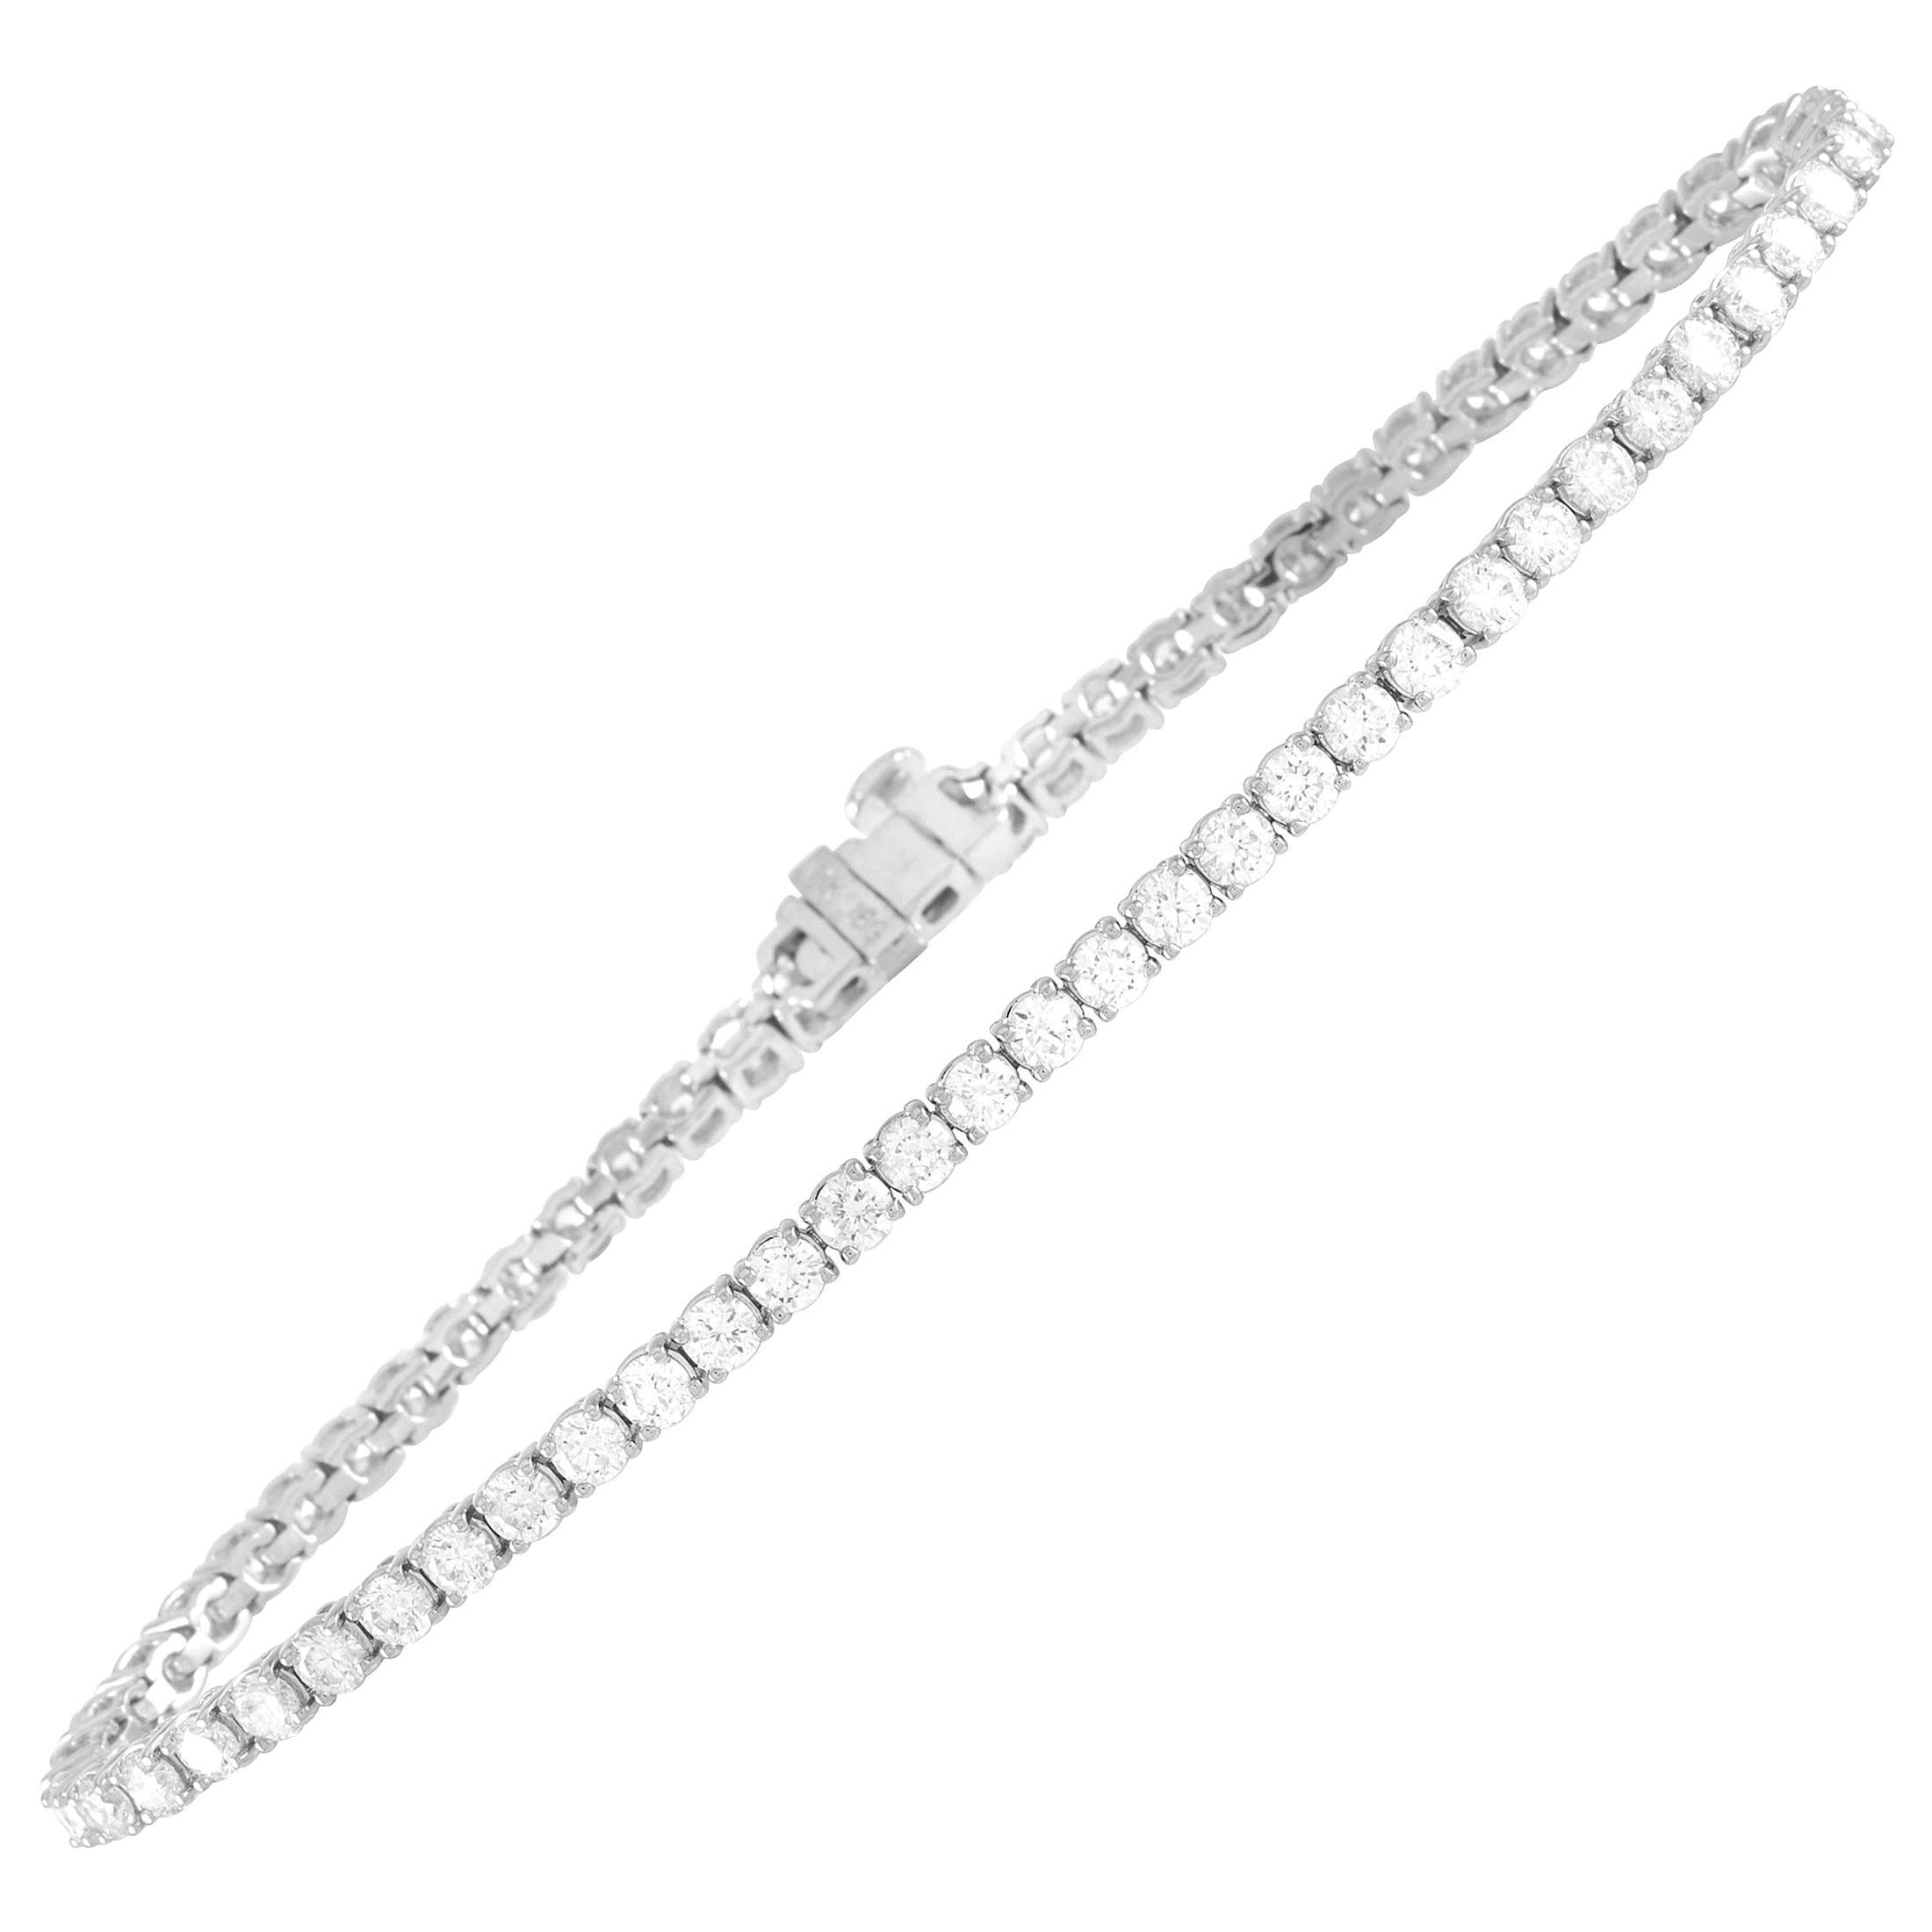 LB Exclusive 14 Karat White Gold 4.92 Carat Diamond Tennis Bracelet